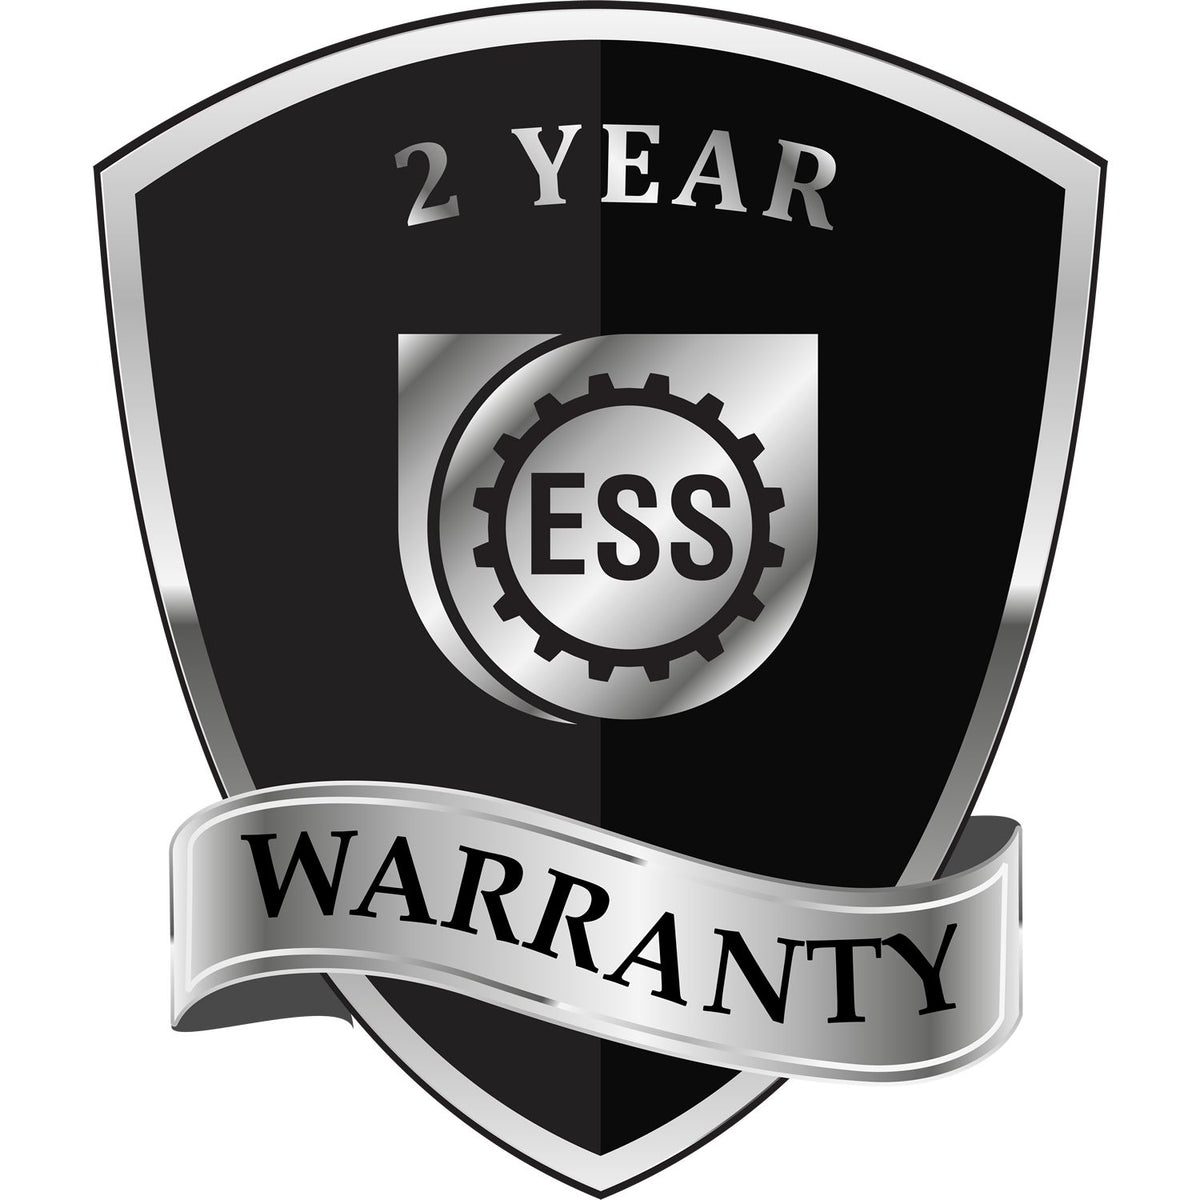 A badge or emblem showing a warranty icon for the Maryland Desk Surveyor Seal Embosser